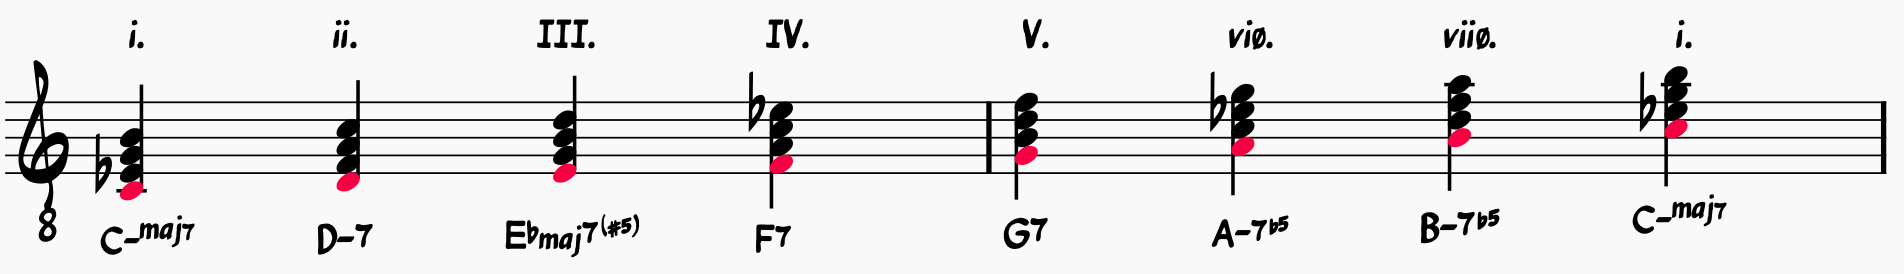 Melodic Minor Scale Harmonized in seventh chords with melodic minor scale shown in red